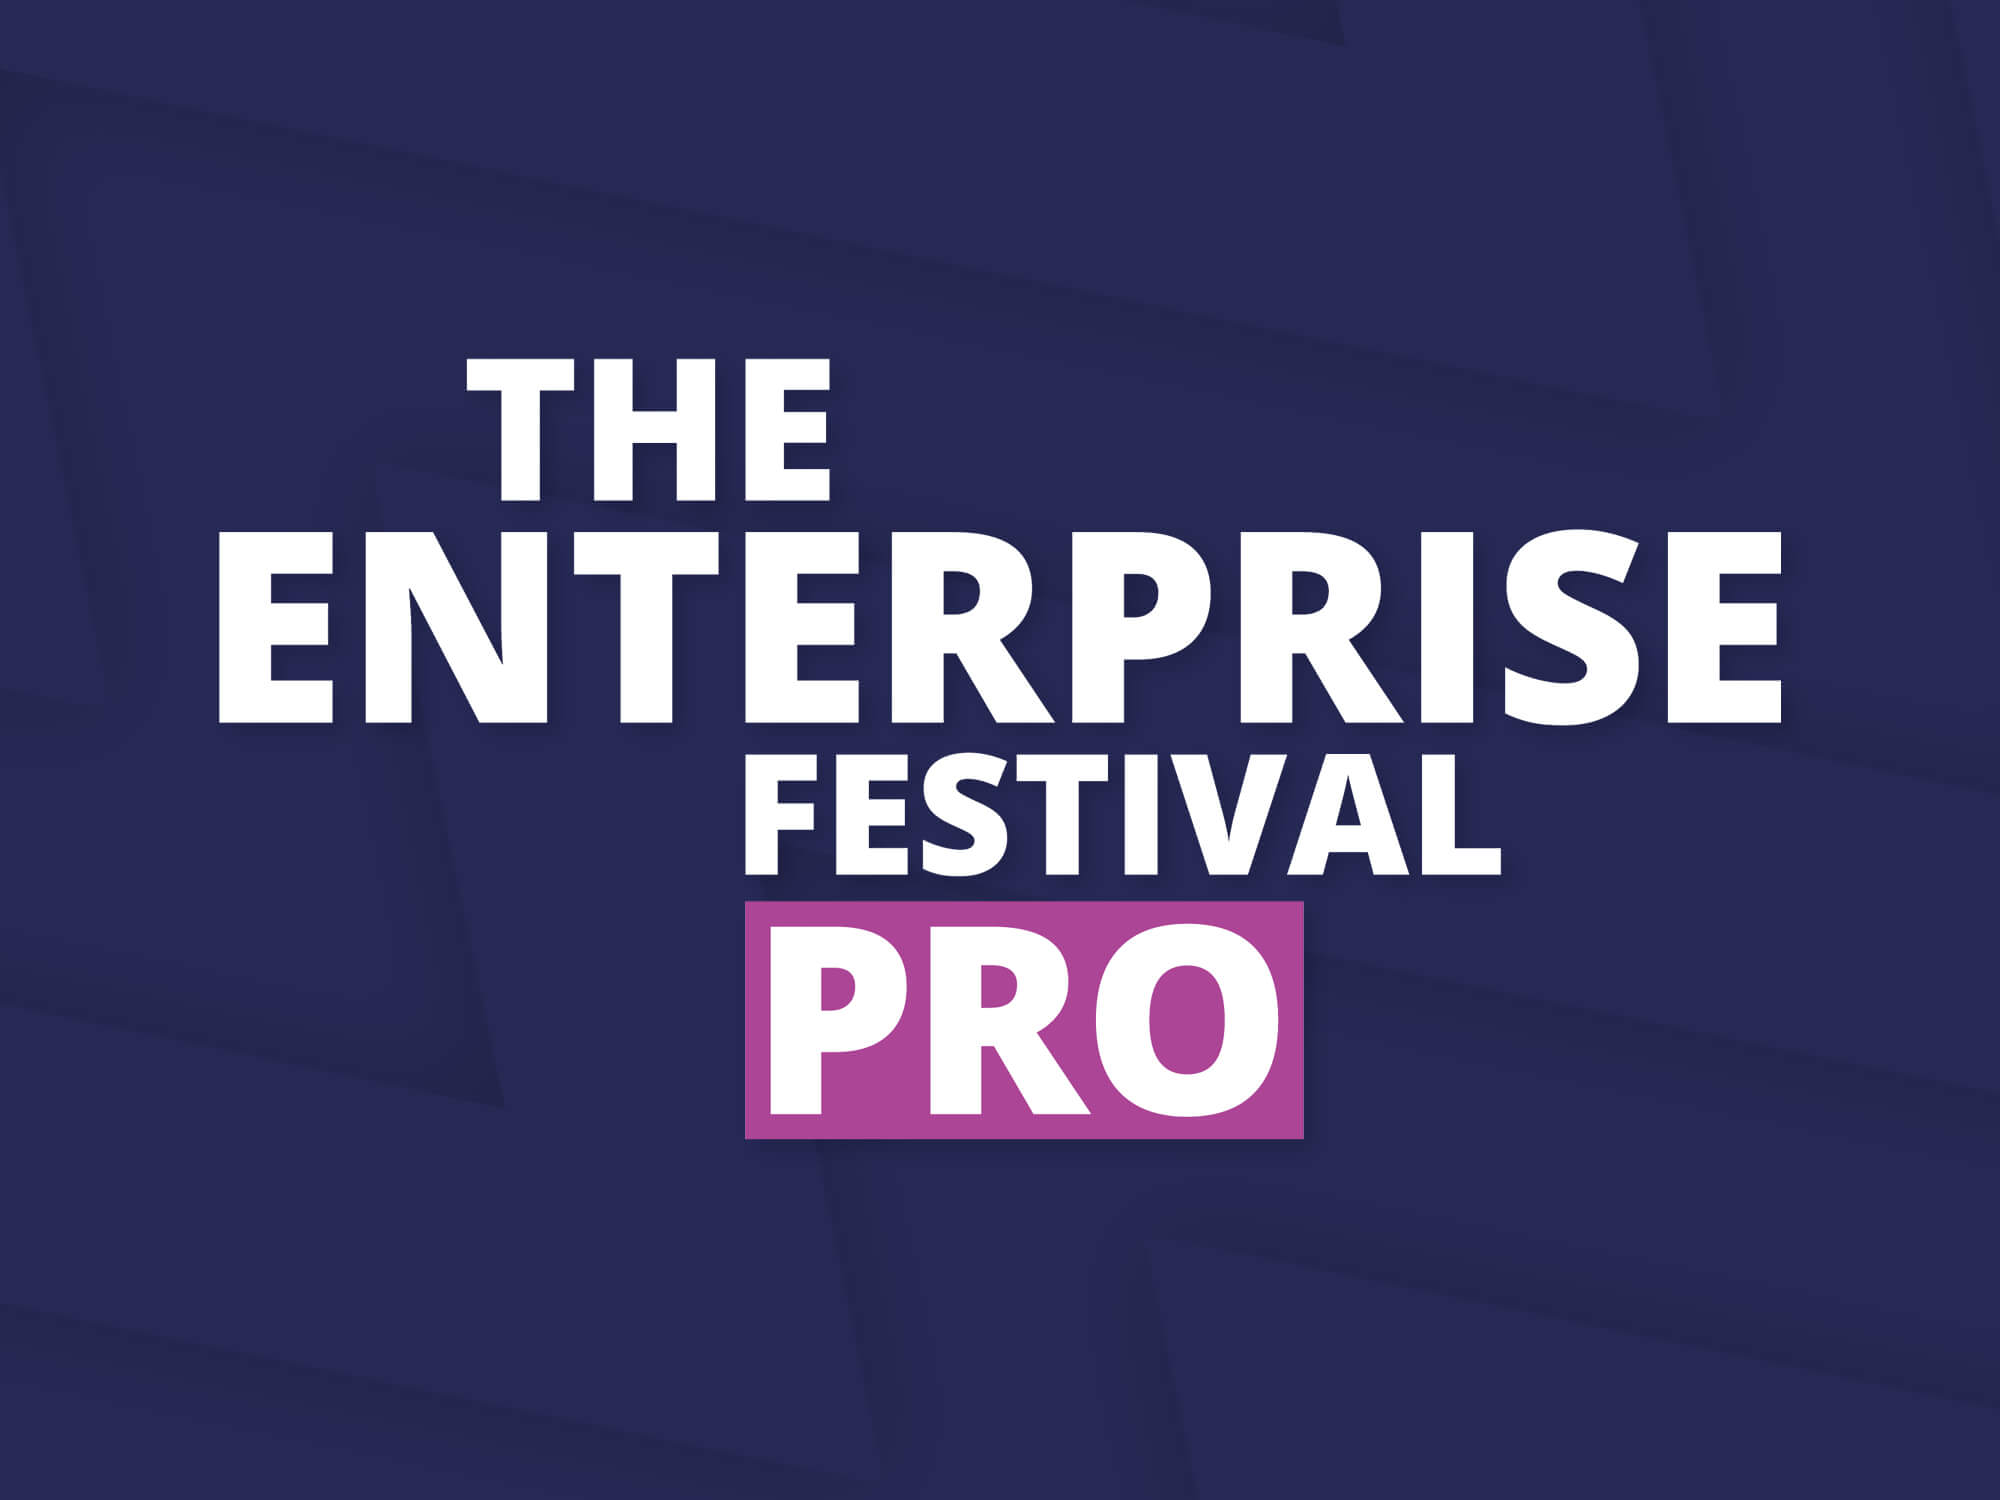 The Enterprise Festival PRO title on navy background